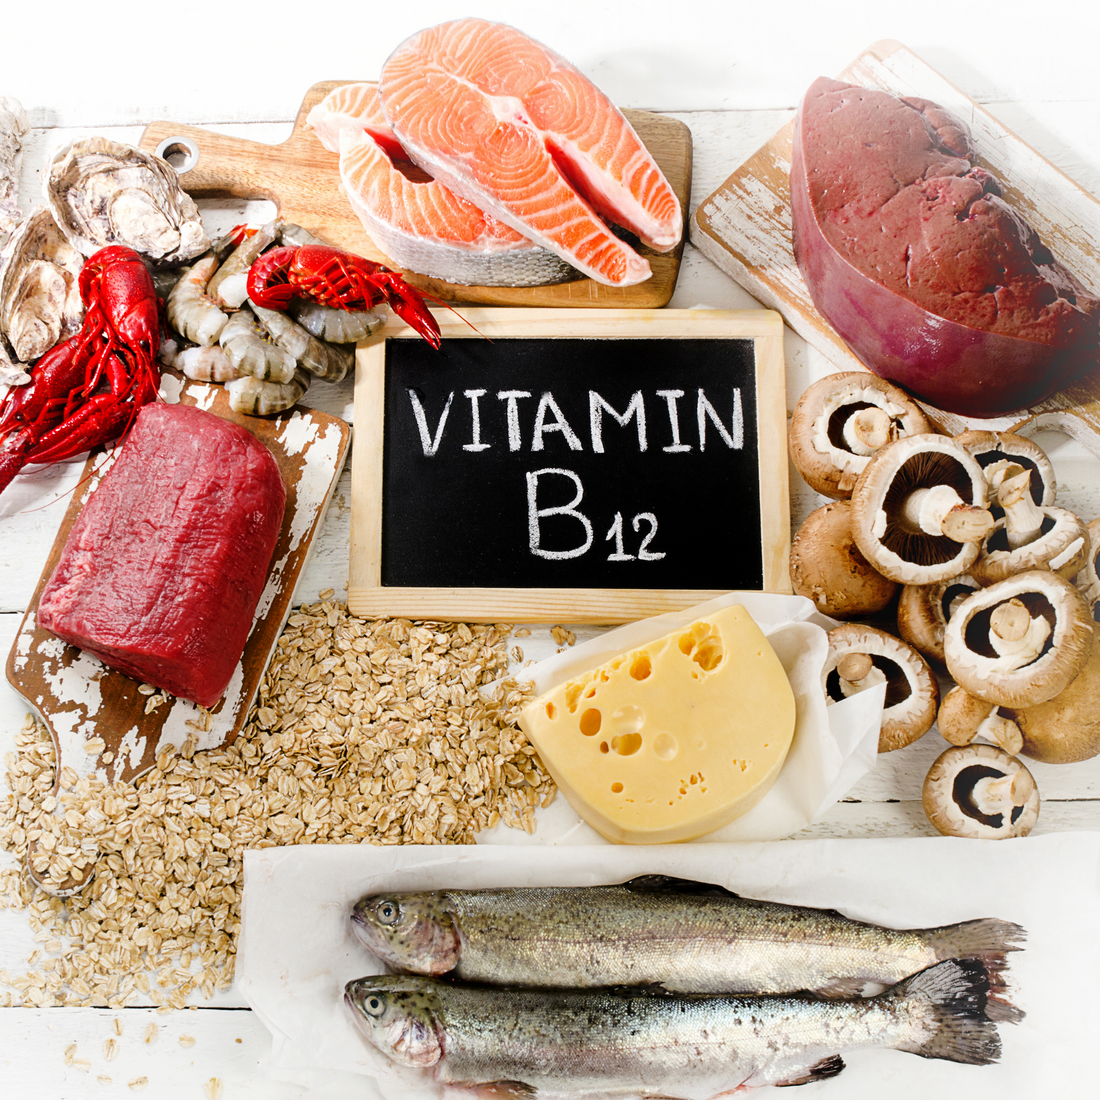 5 Crucial Health Benefits of Vitamin B12